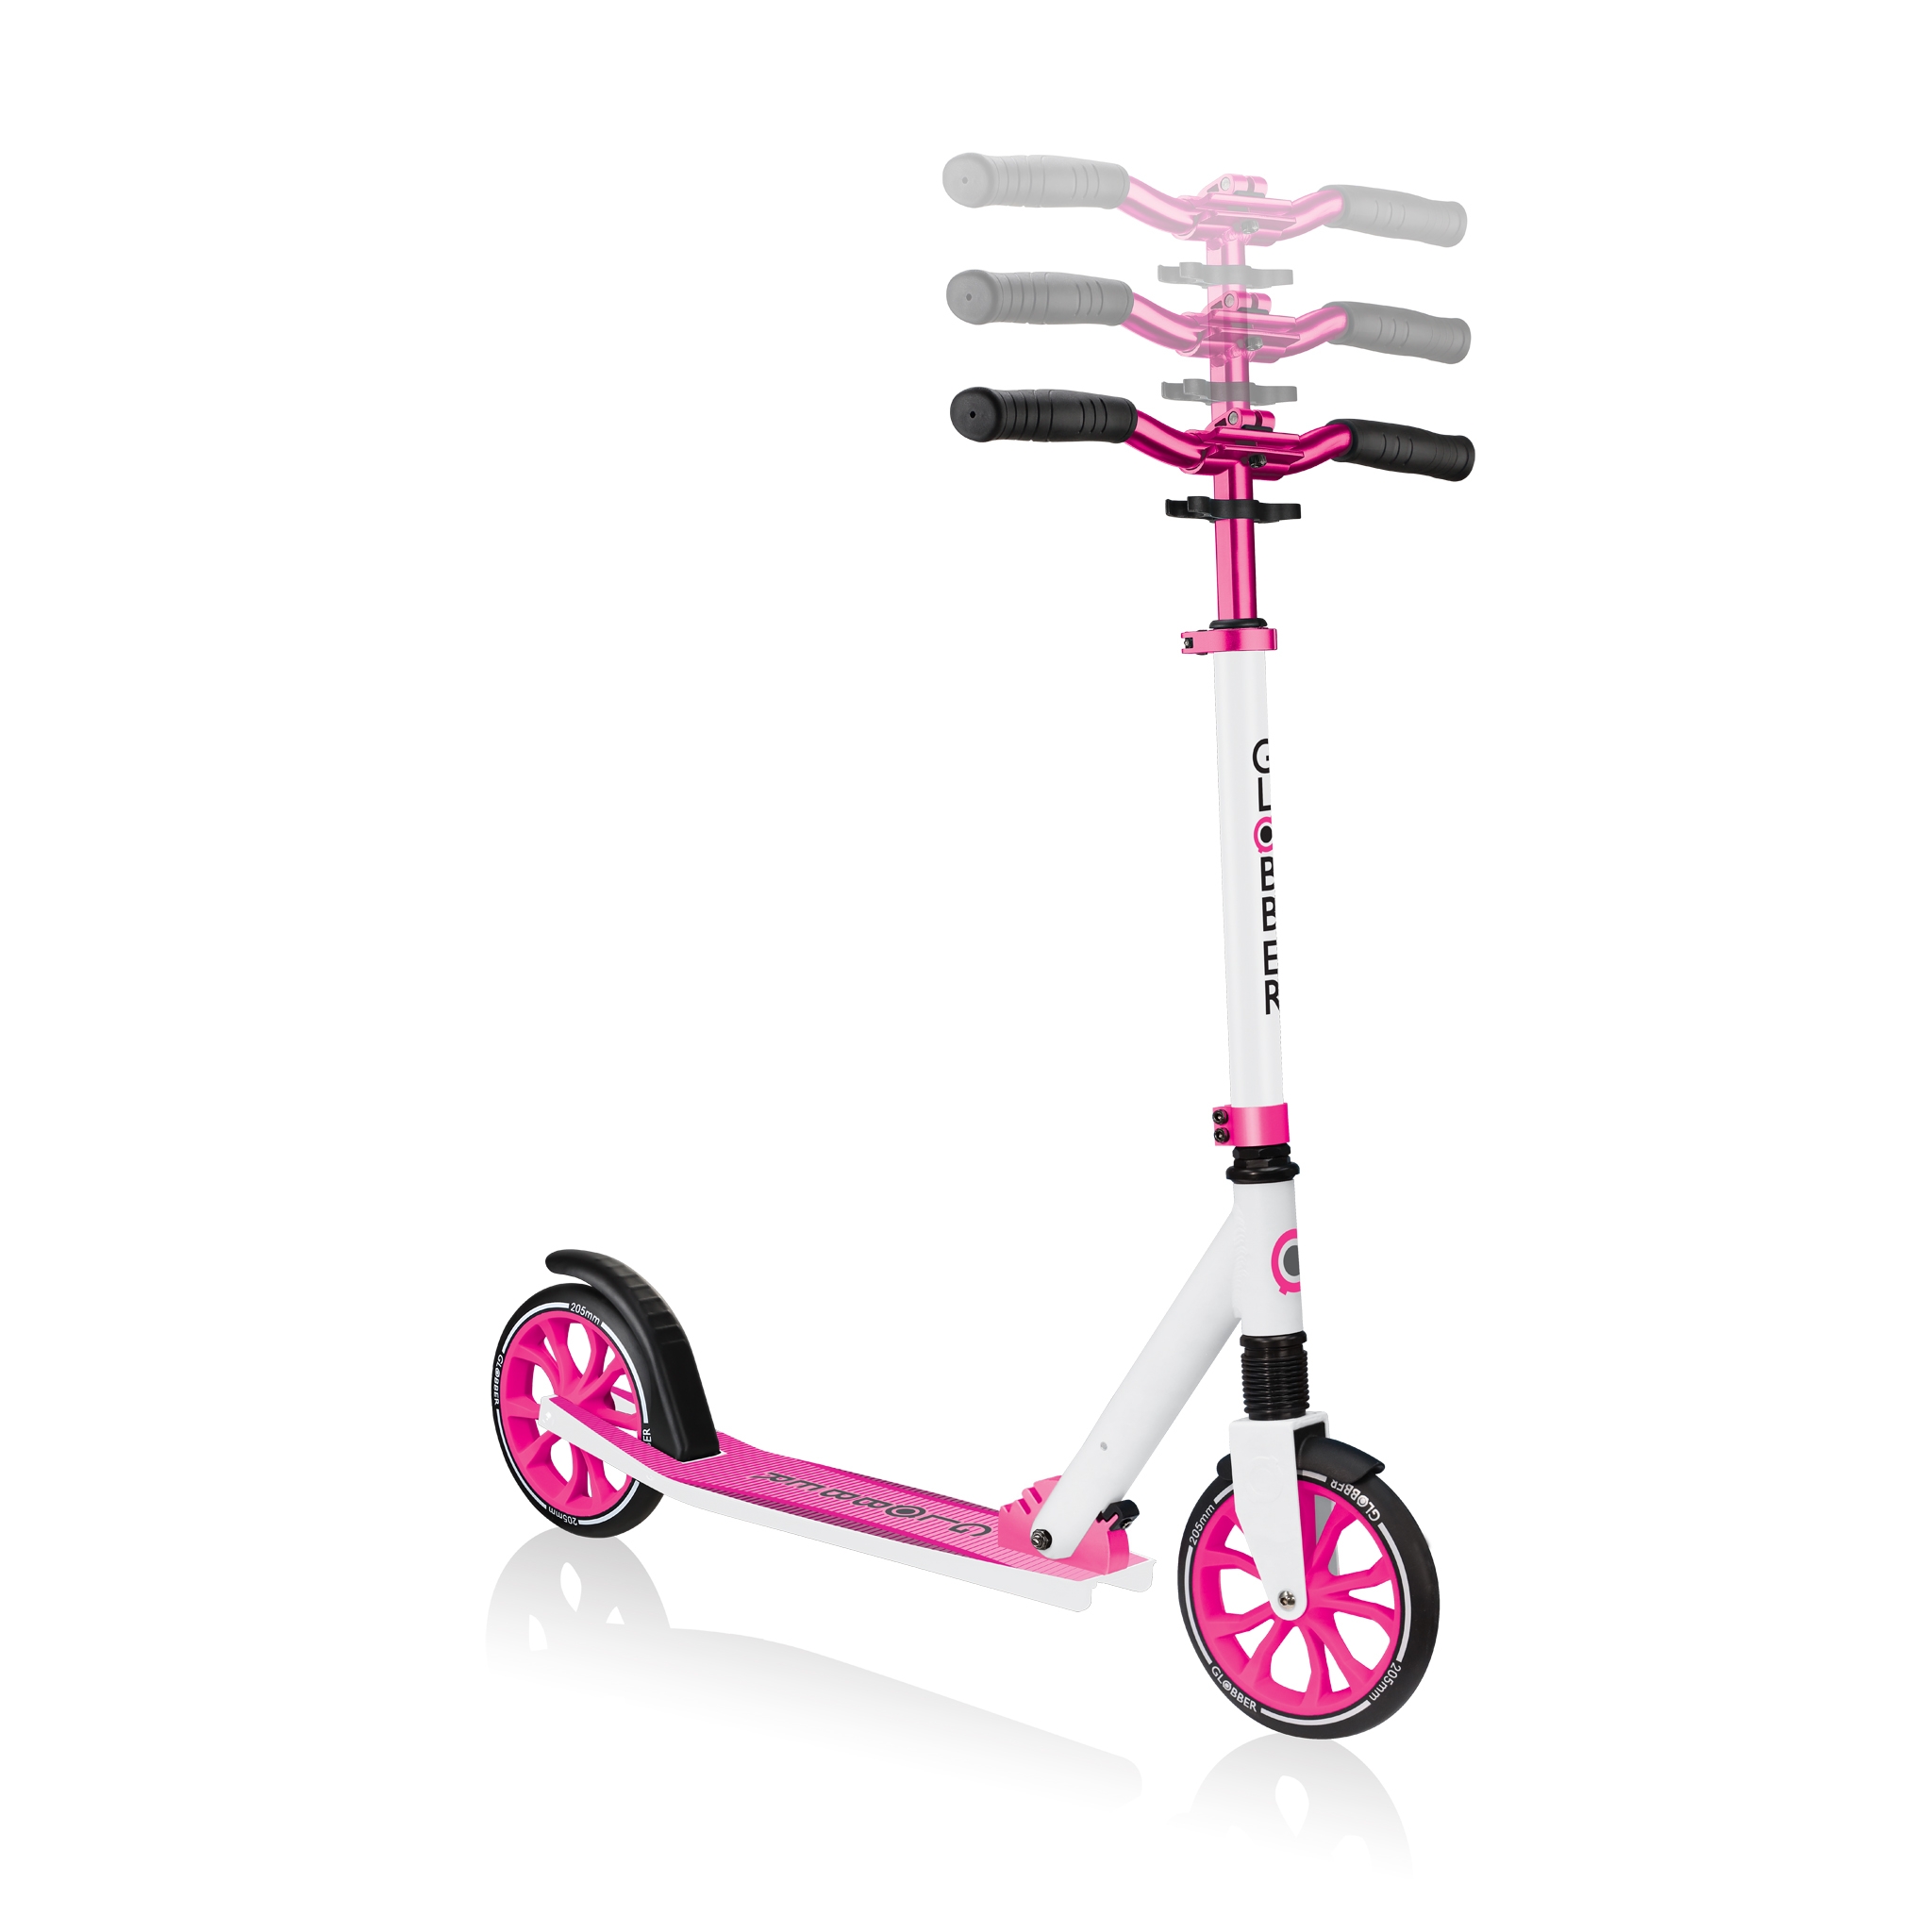 Globber-NL-205-205mm-big-wheel-scooter-for-kids-3-height-adjustable-scooter-t-bar 2